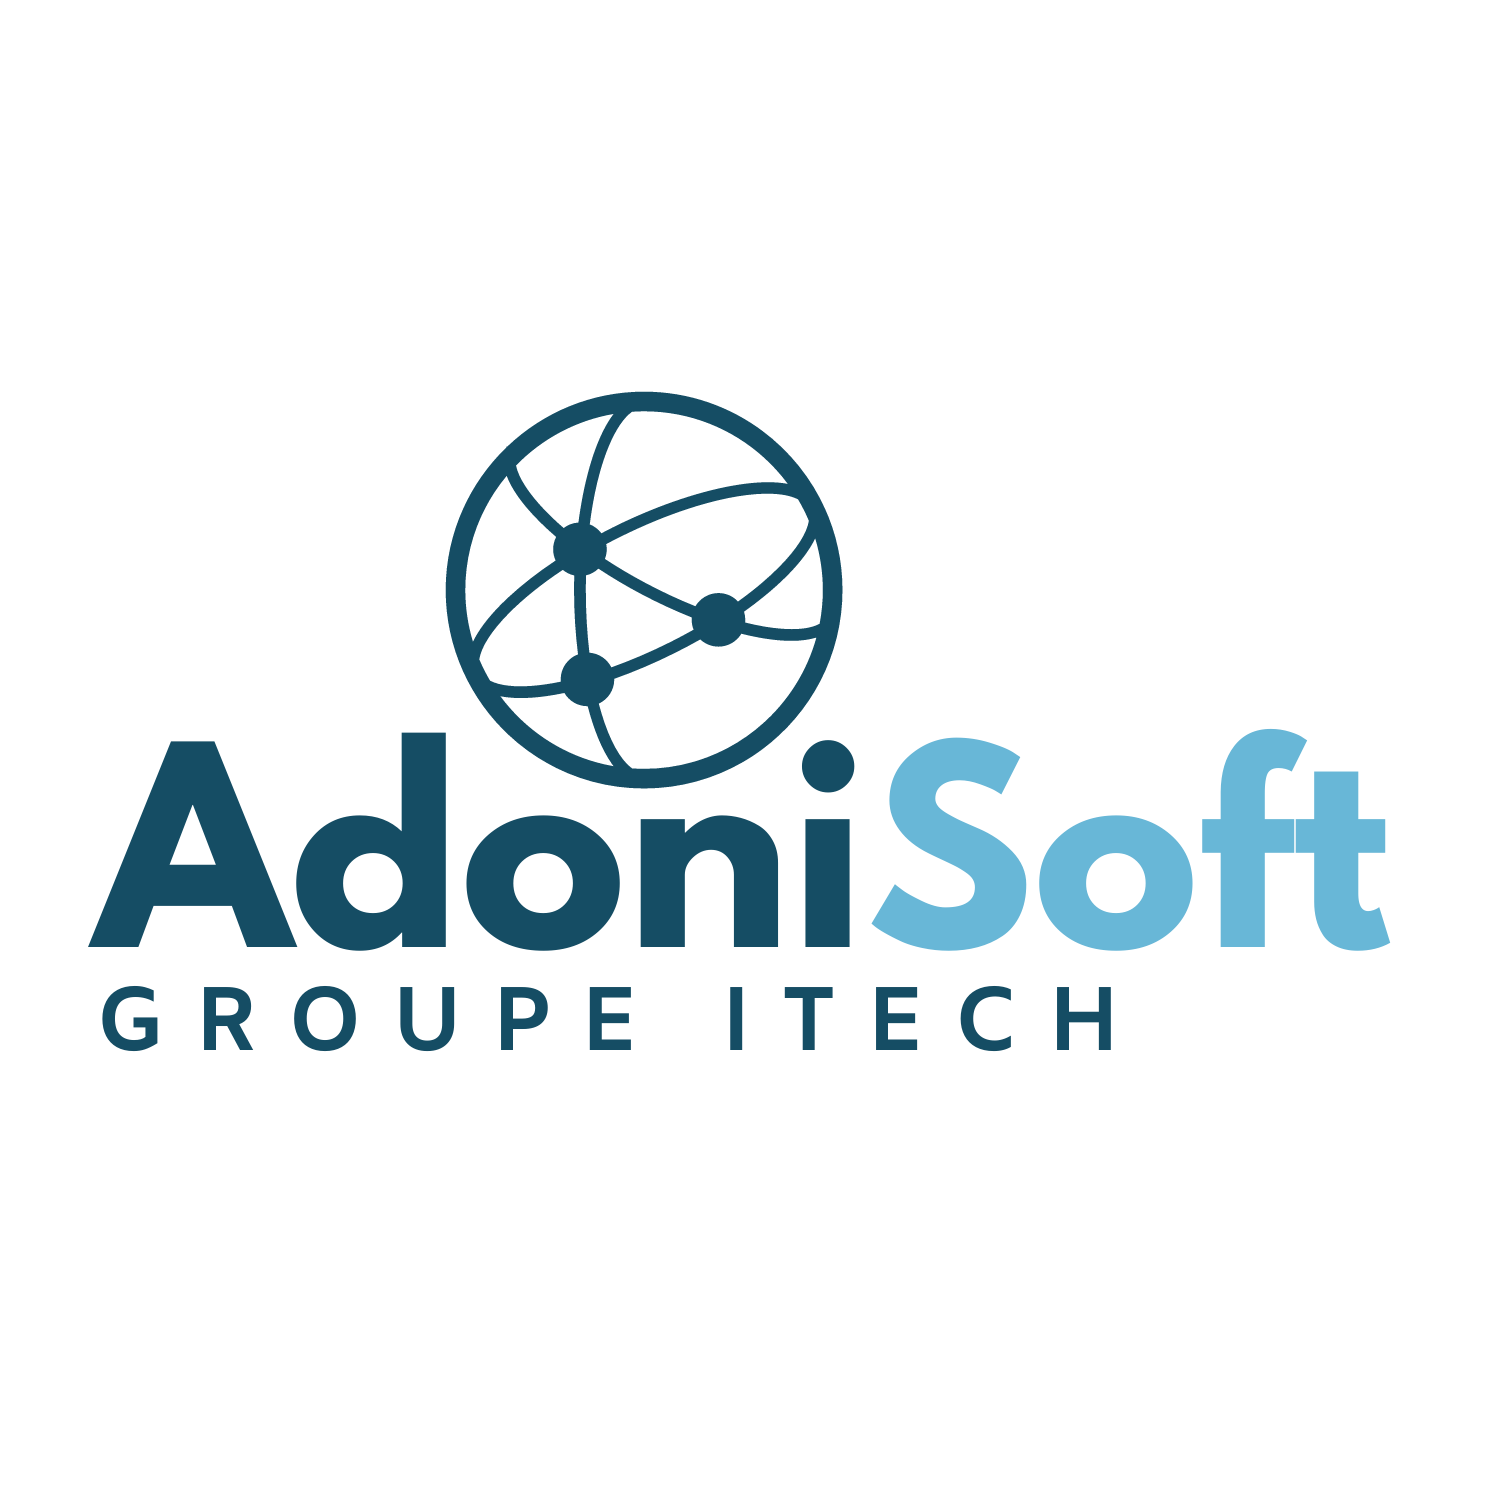 Adonisoft